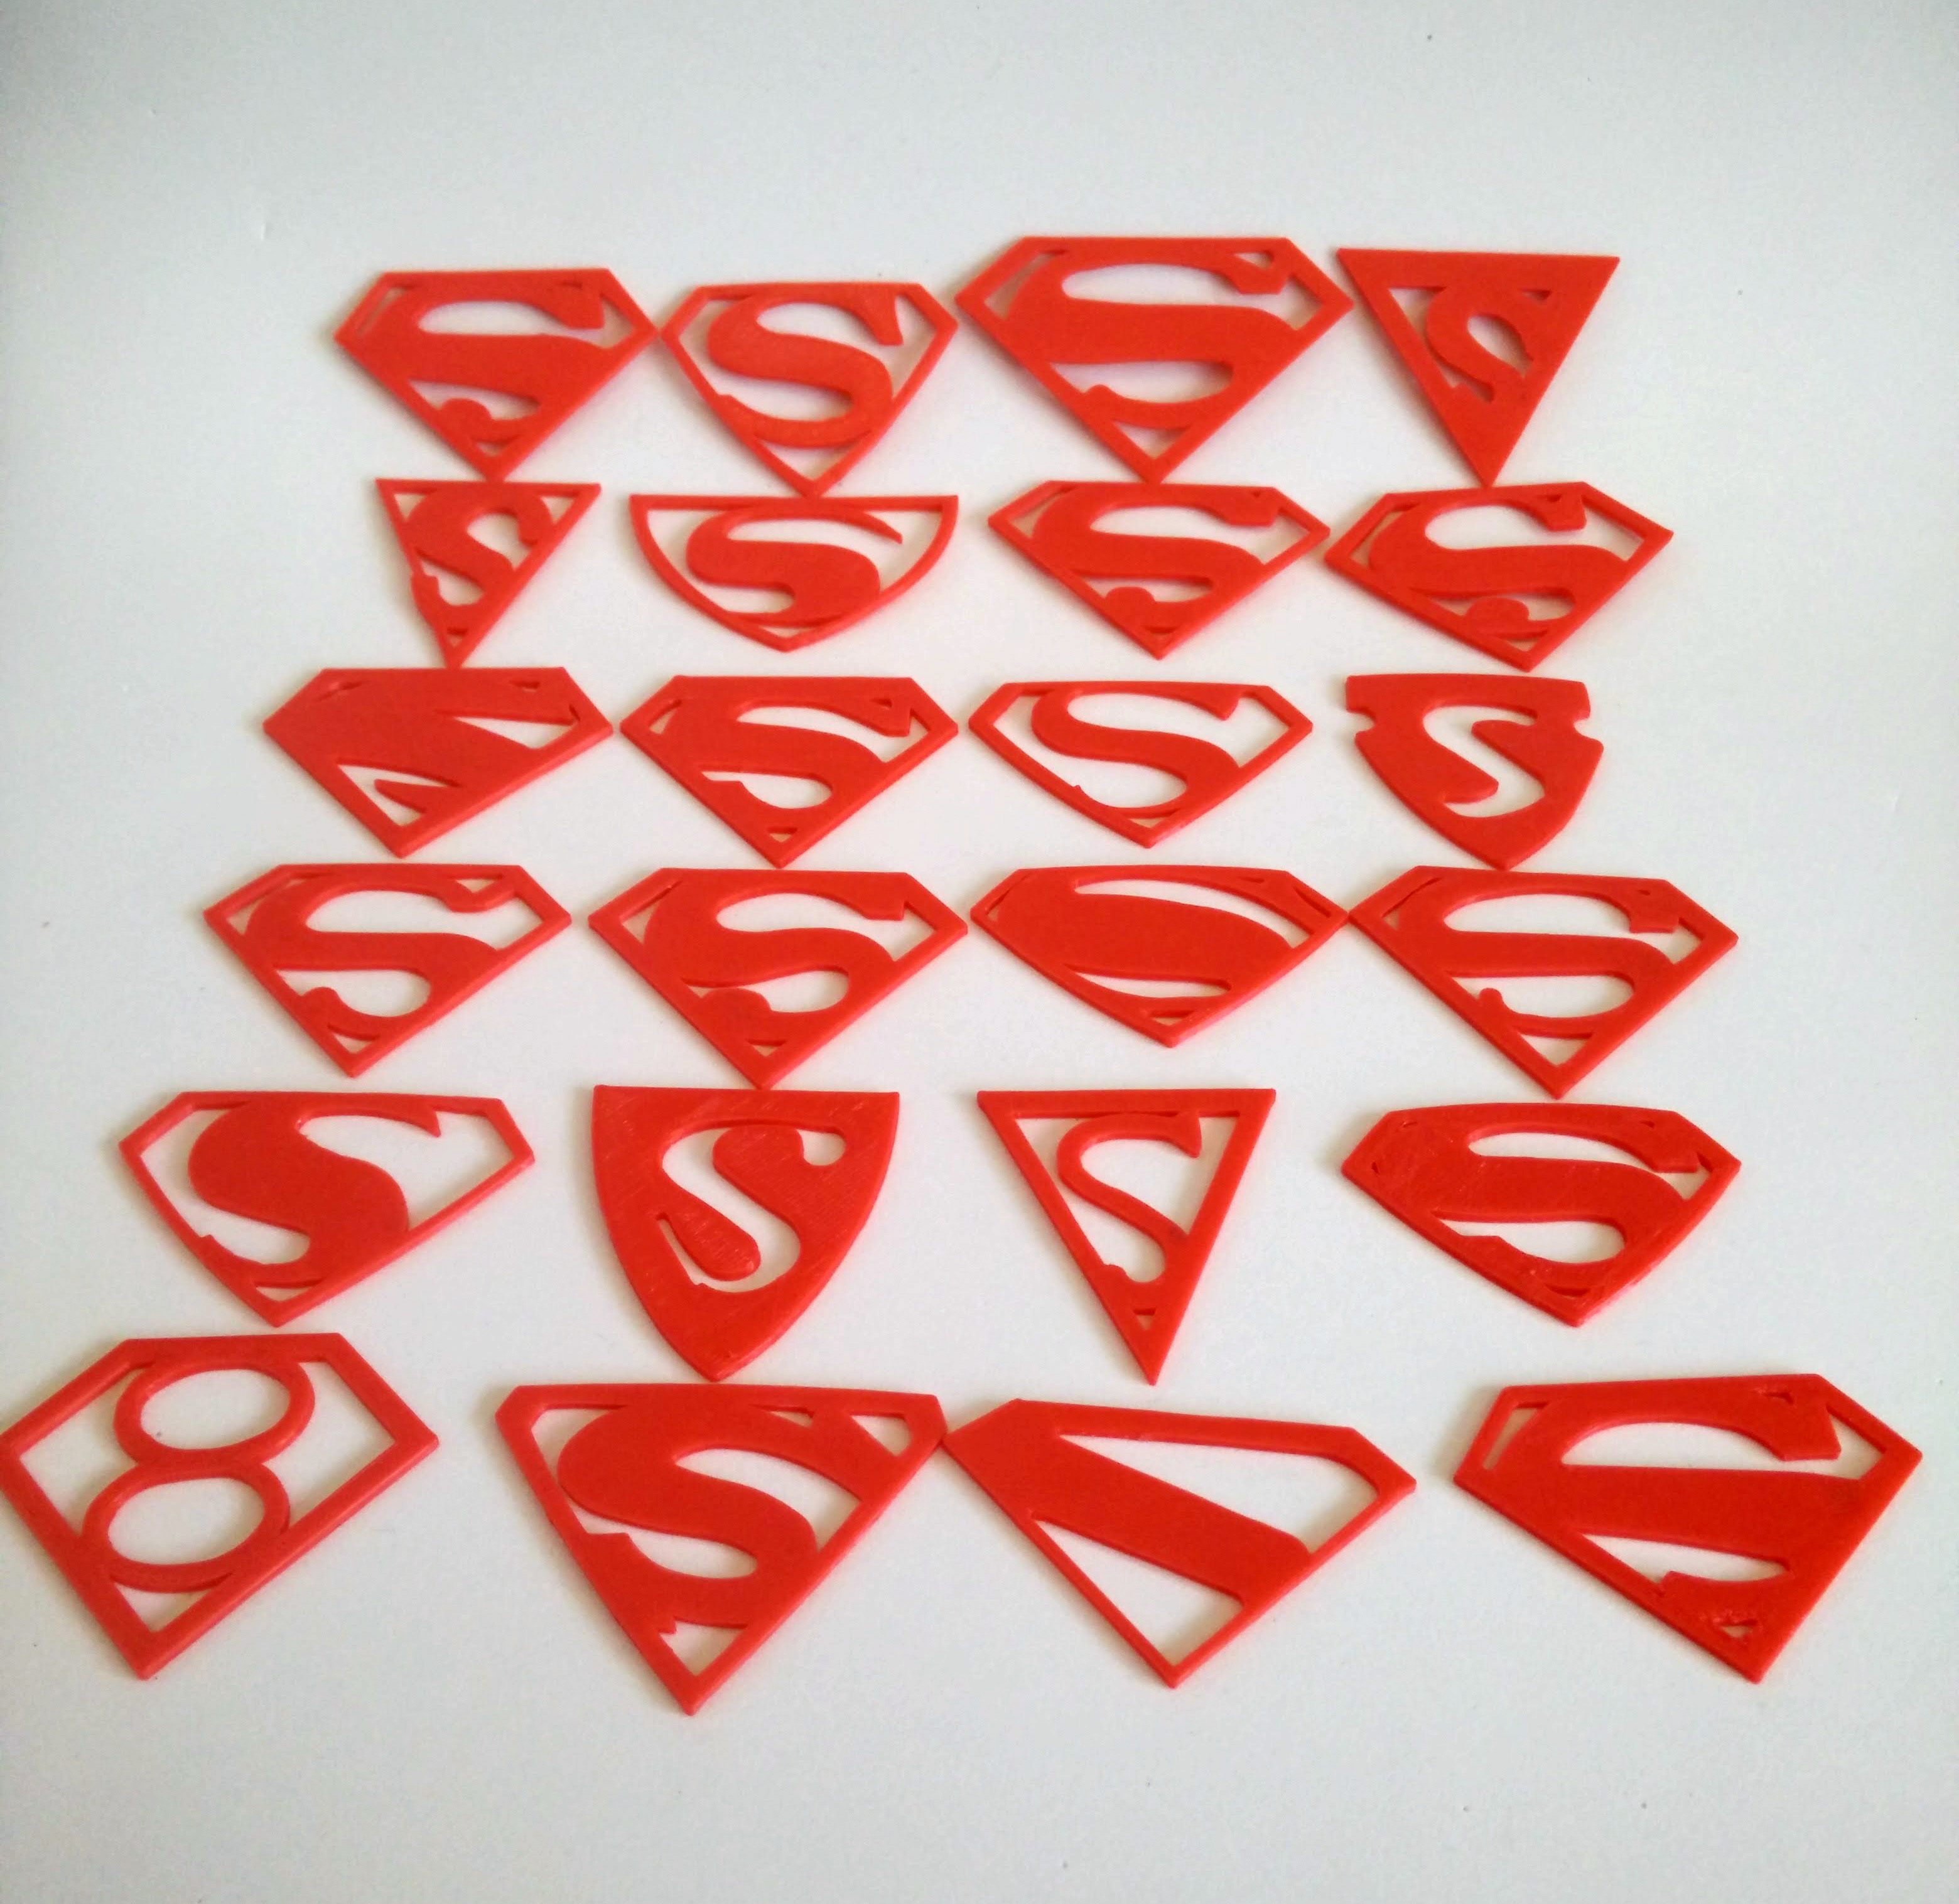 All of Superman logos